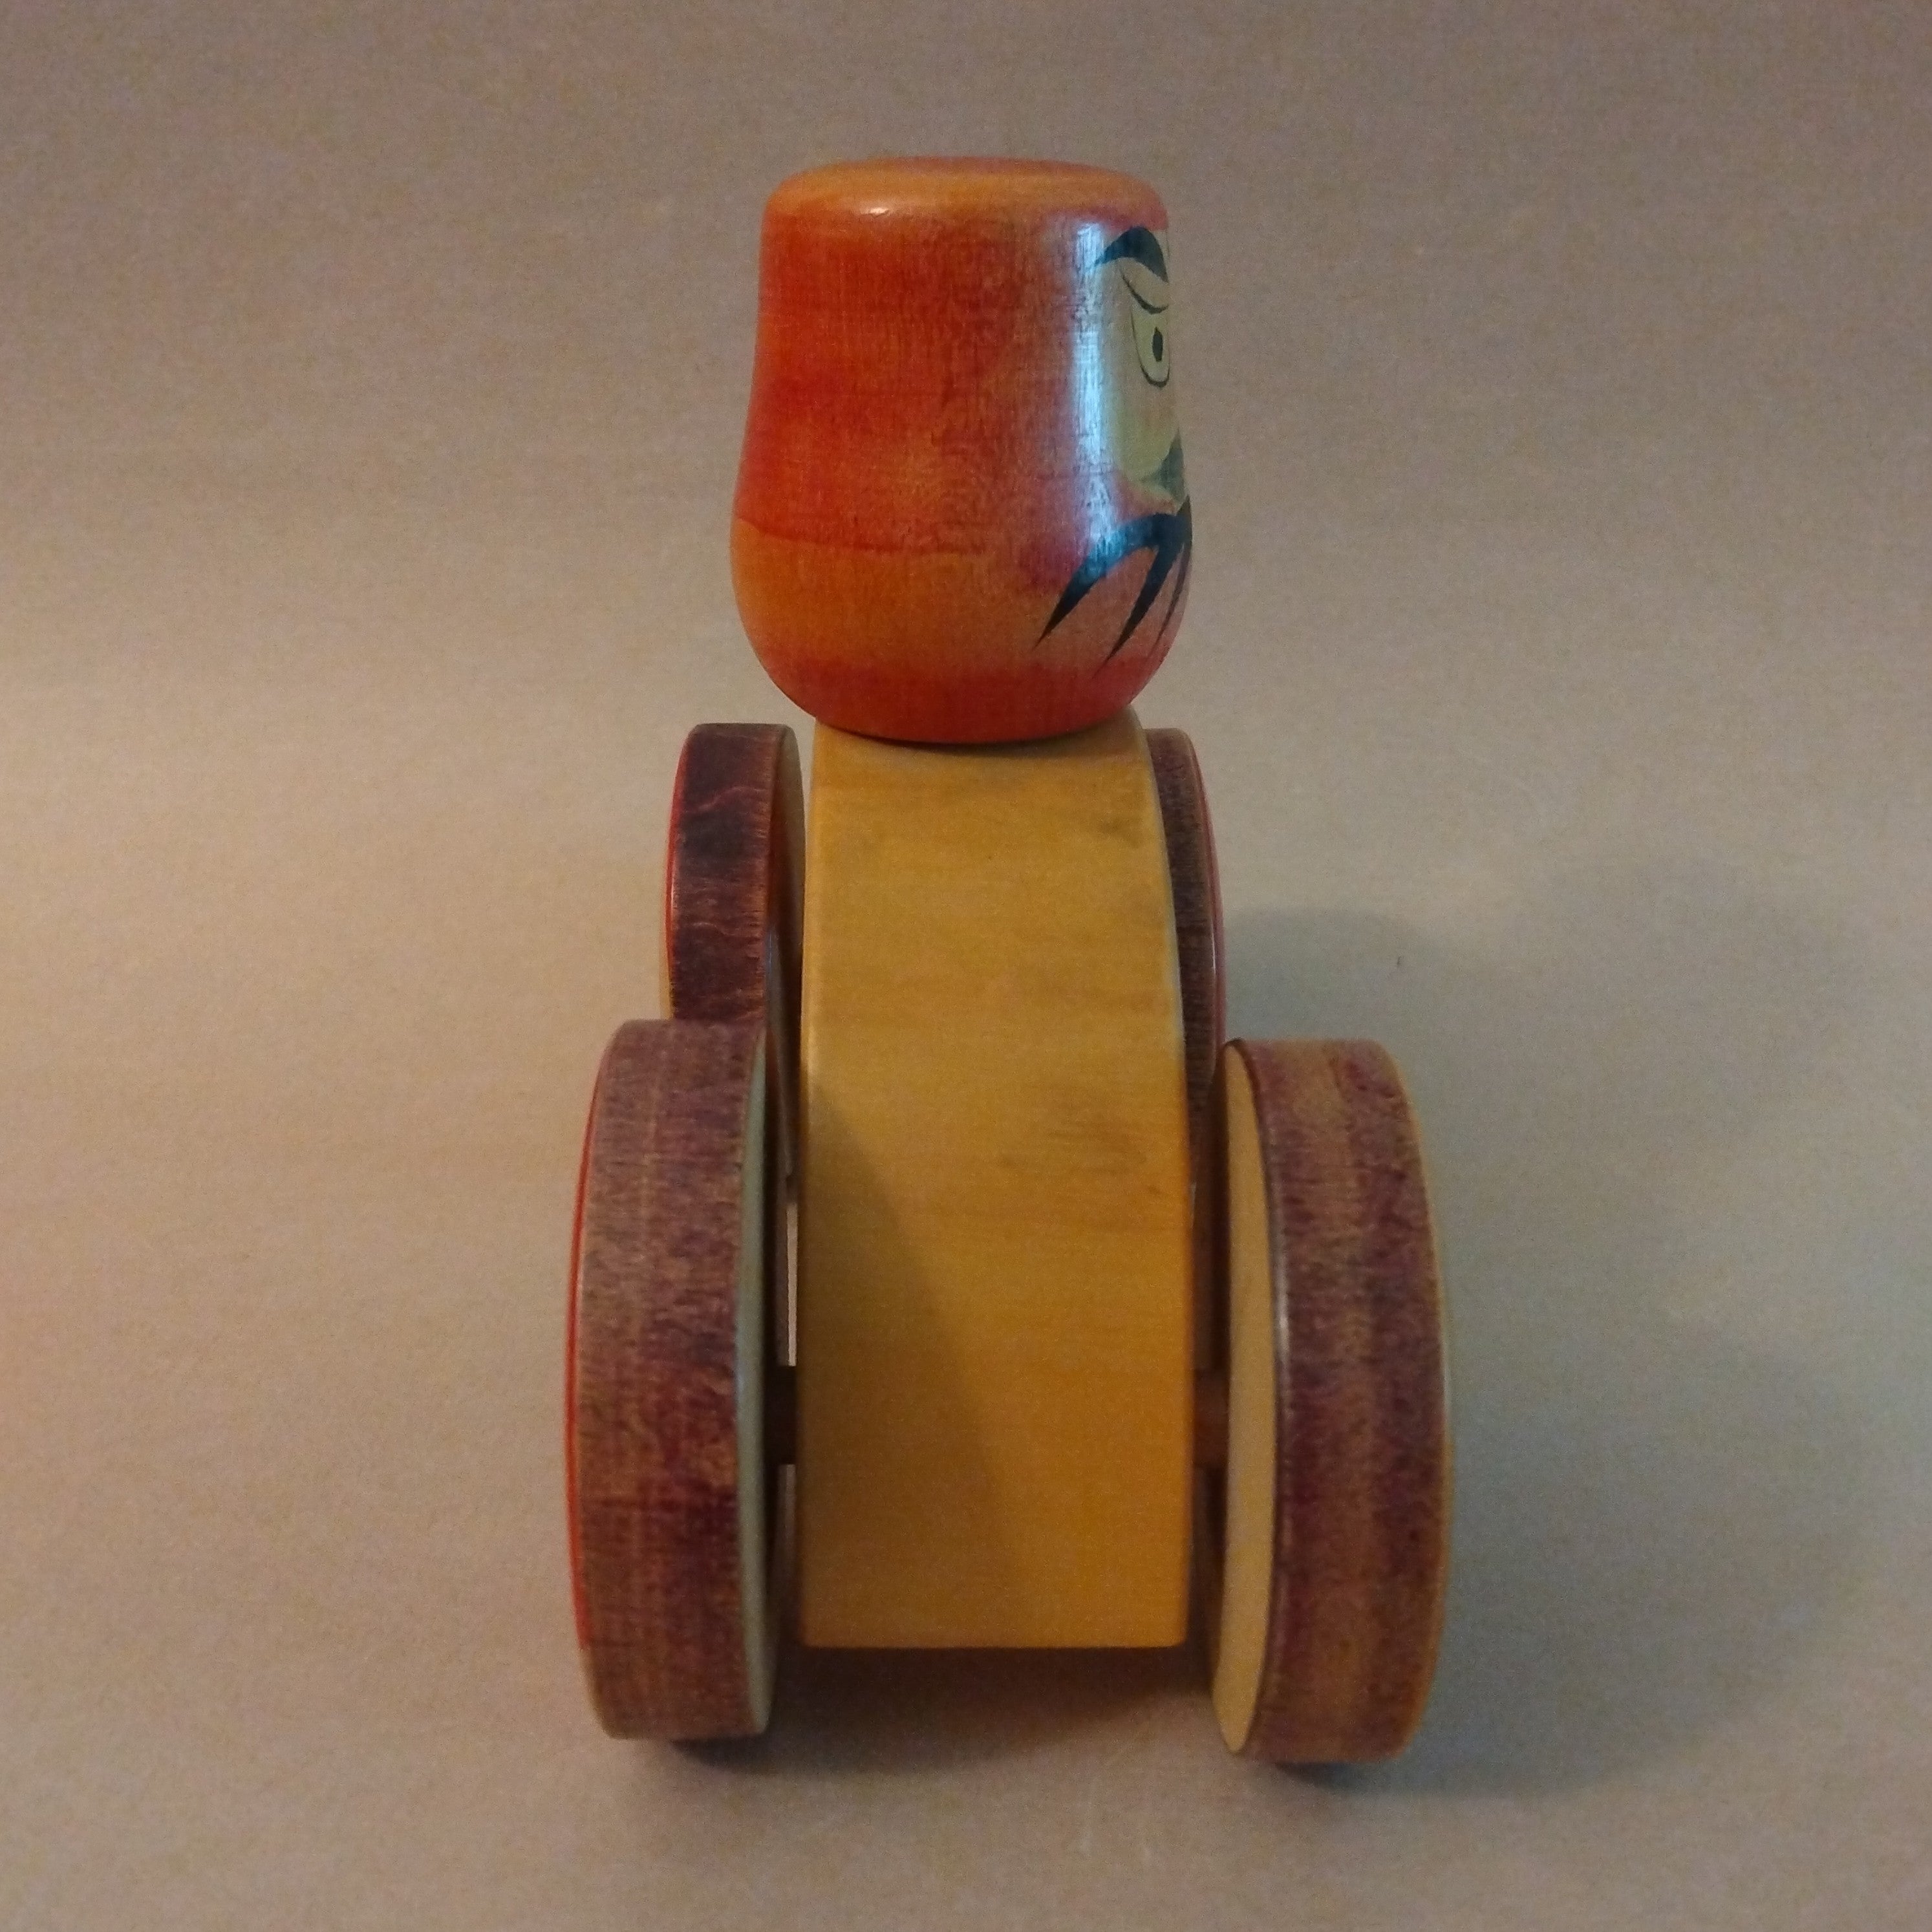 Daruma Kuruma, Daruma on Wheels, Japanese wooden Folk Toy; Thiel Collection